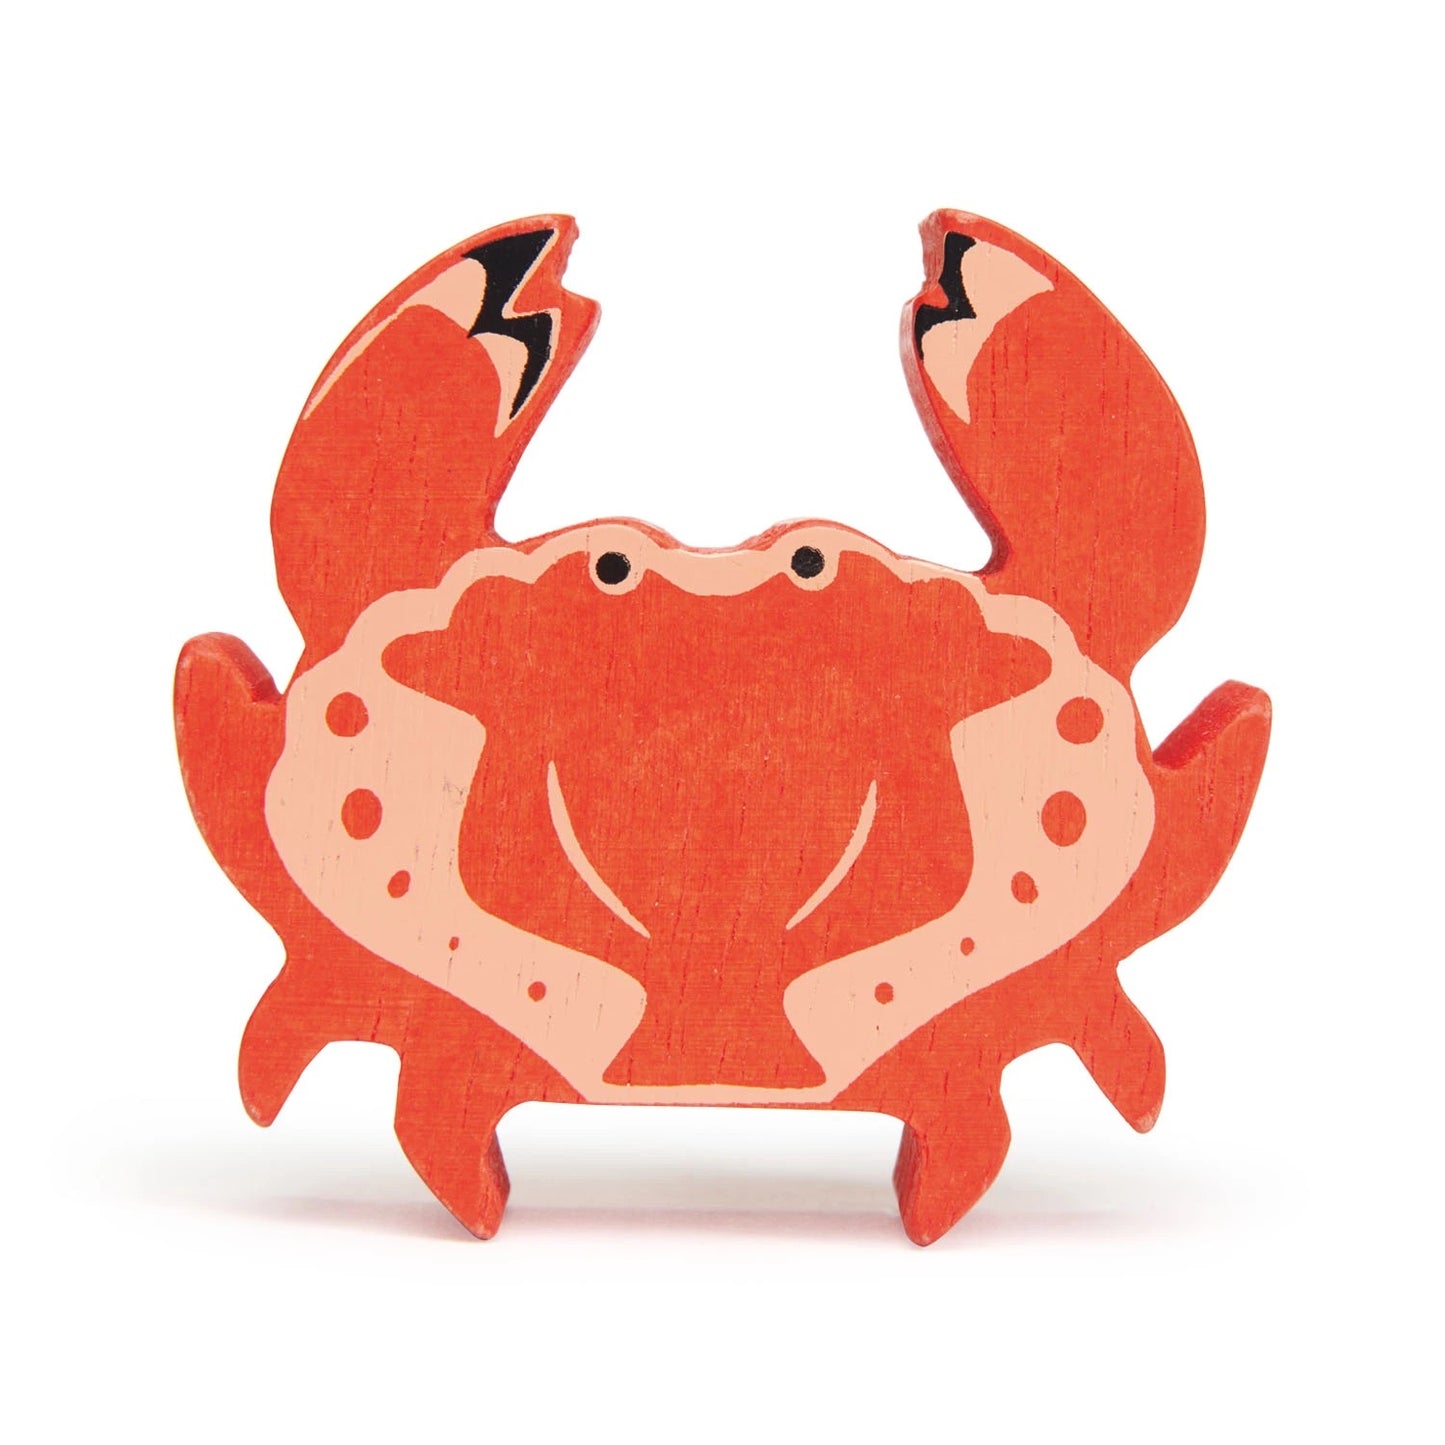 Tender Leaf Toys - Wood Animal - Crab